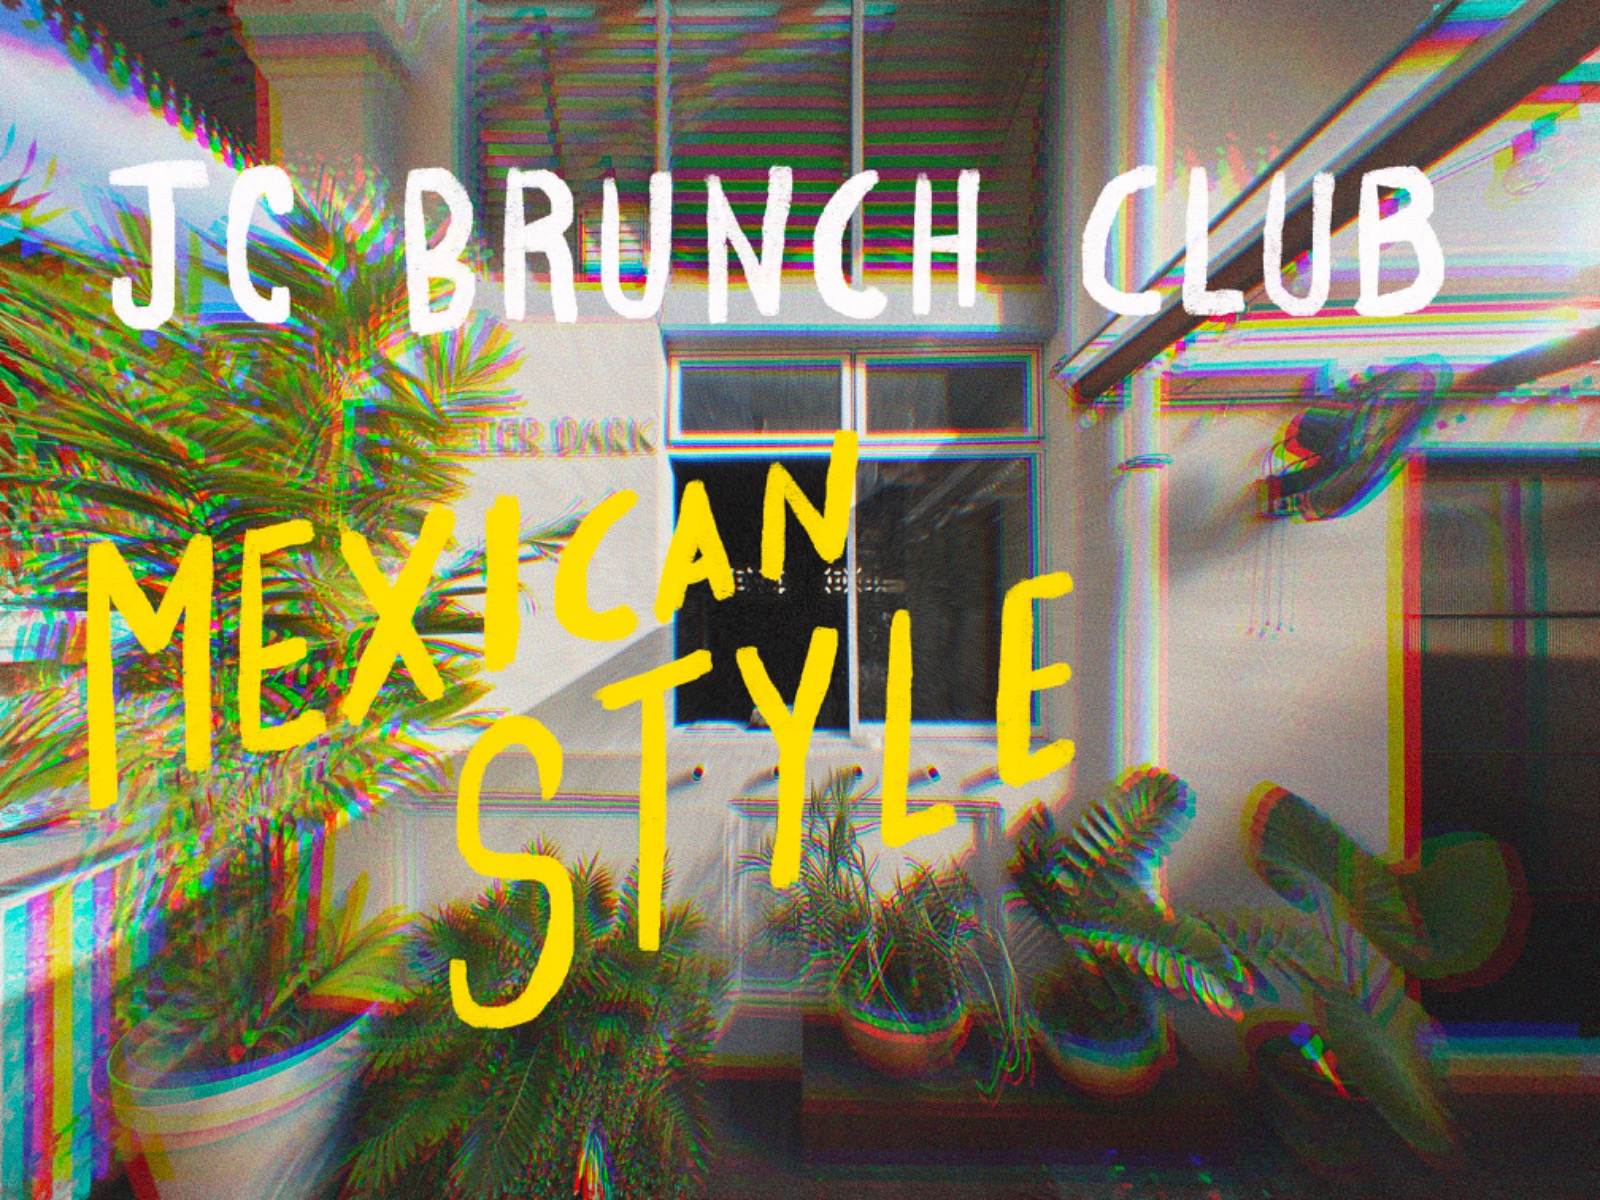 Joo Chiat Mexican Brunch Club